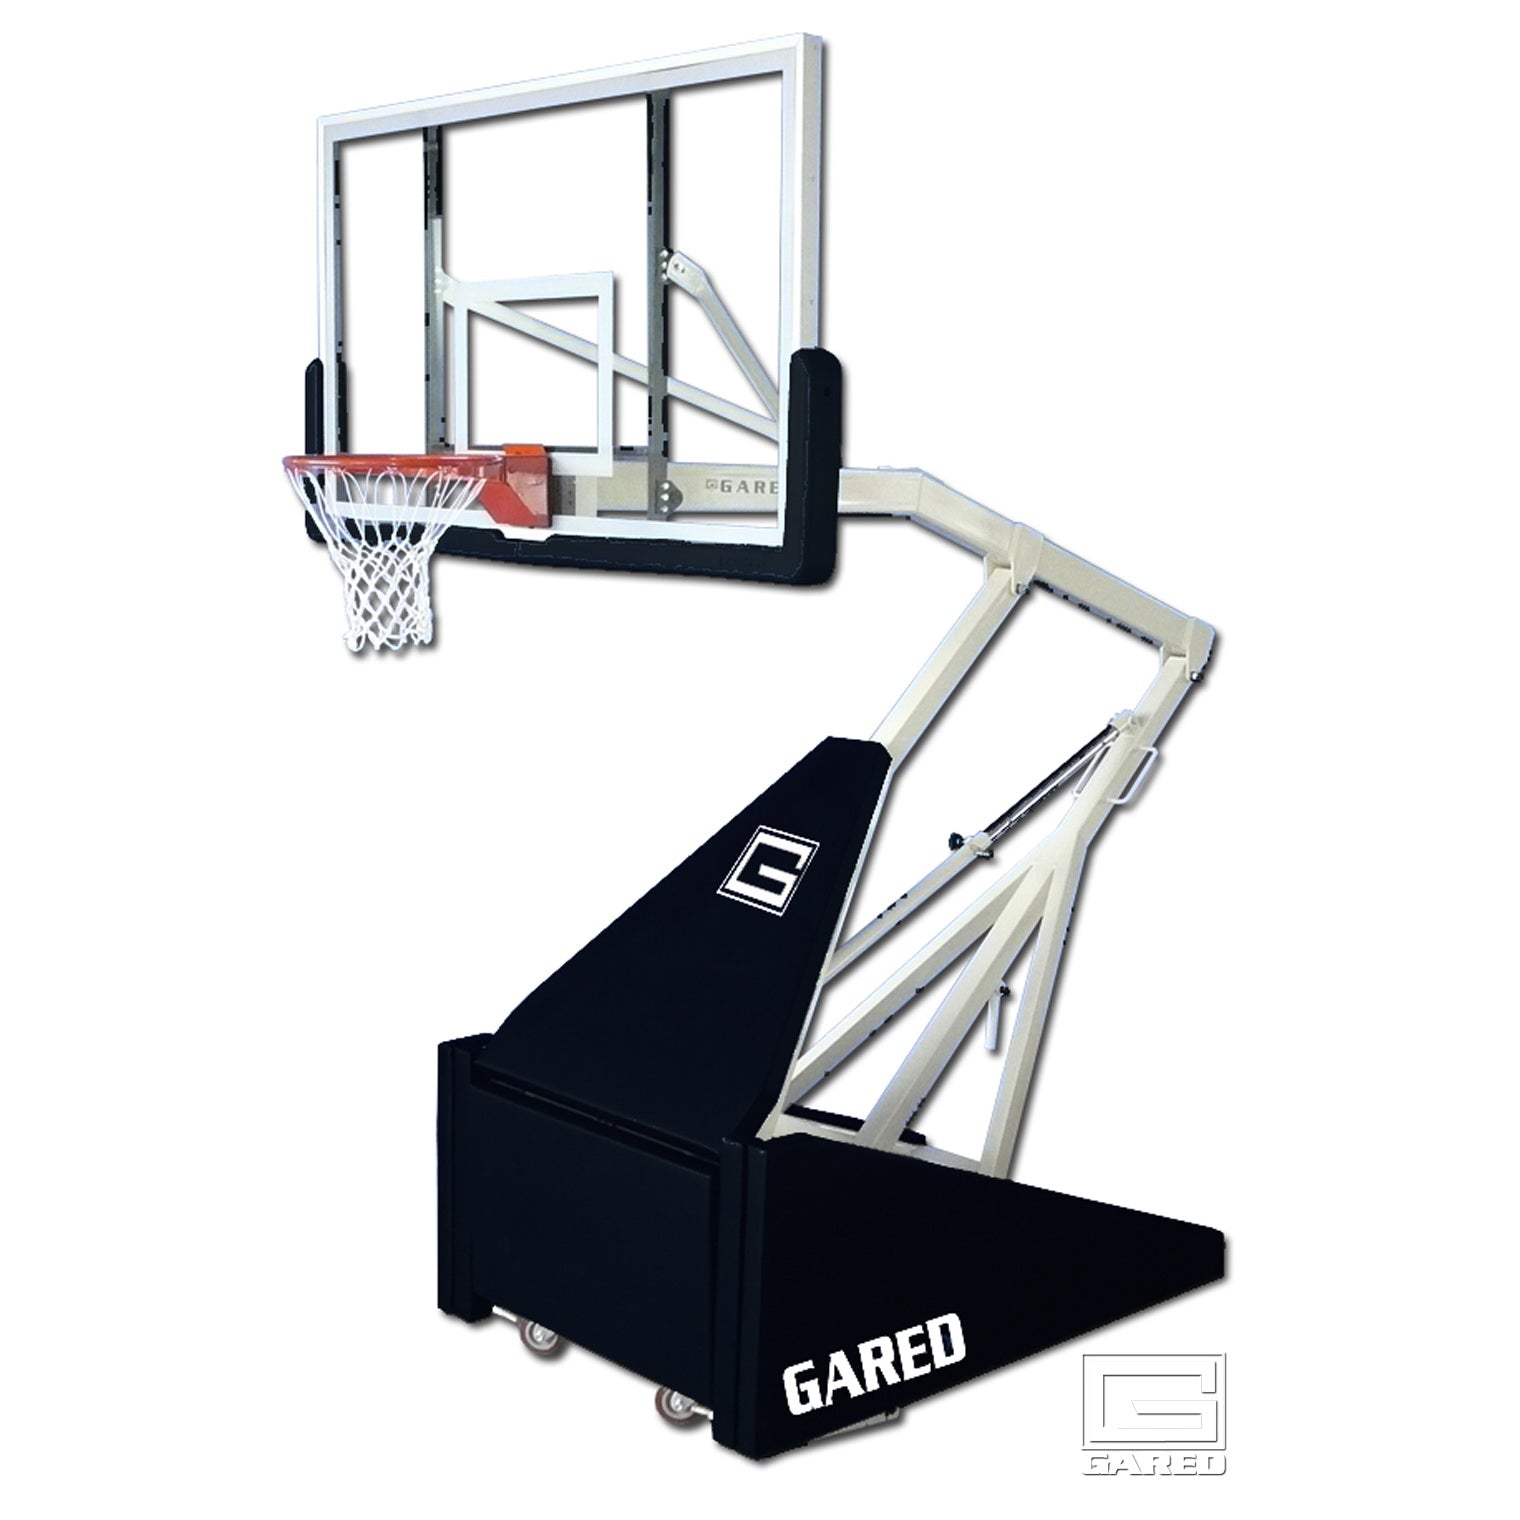 Gared Hoopmaster LT Portable Basketball Backstop